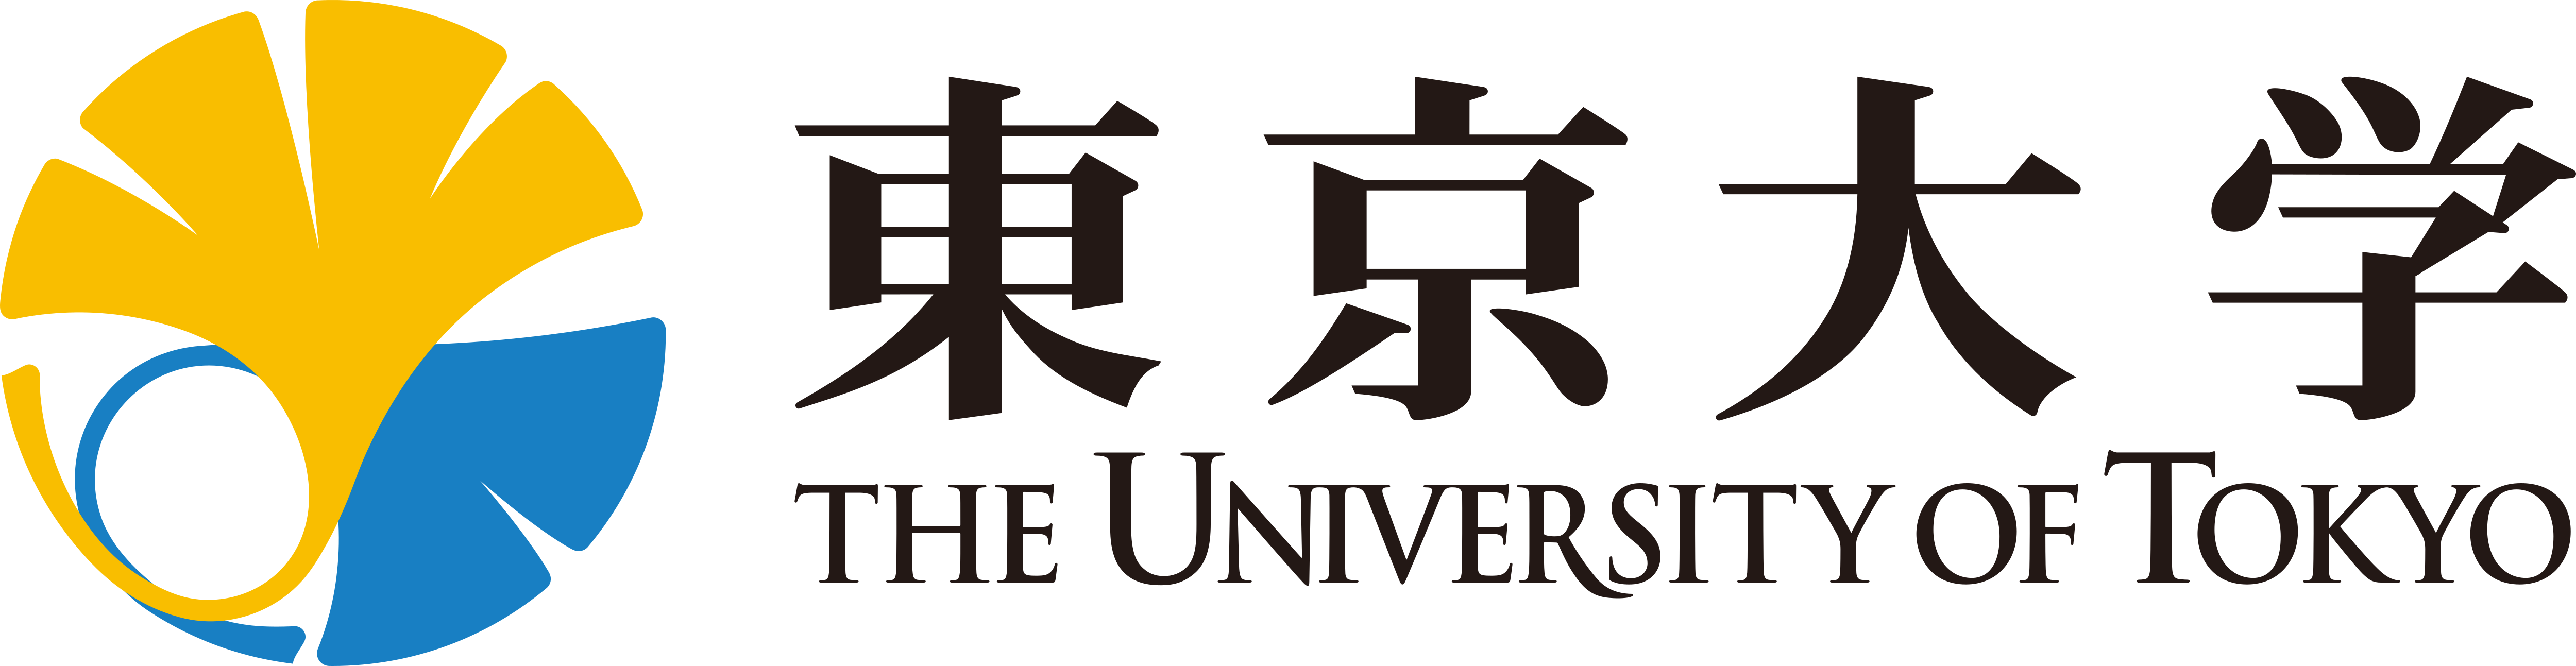 Universidade de Tóquio – Download de logotipos